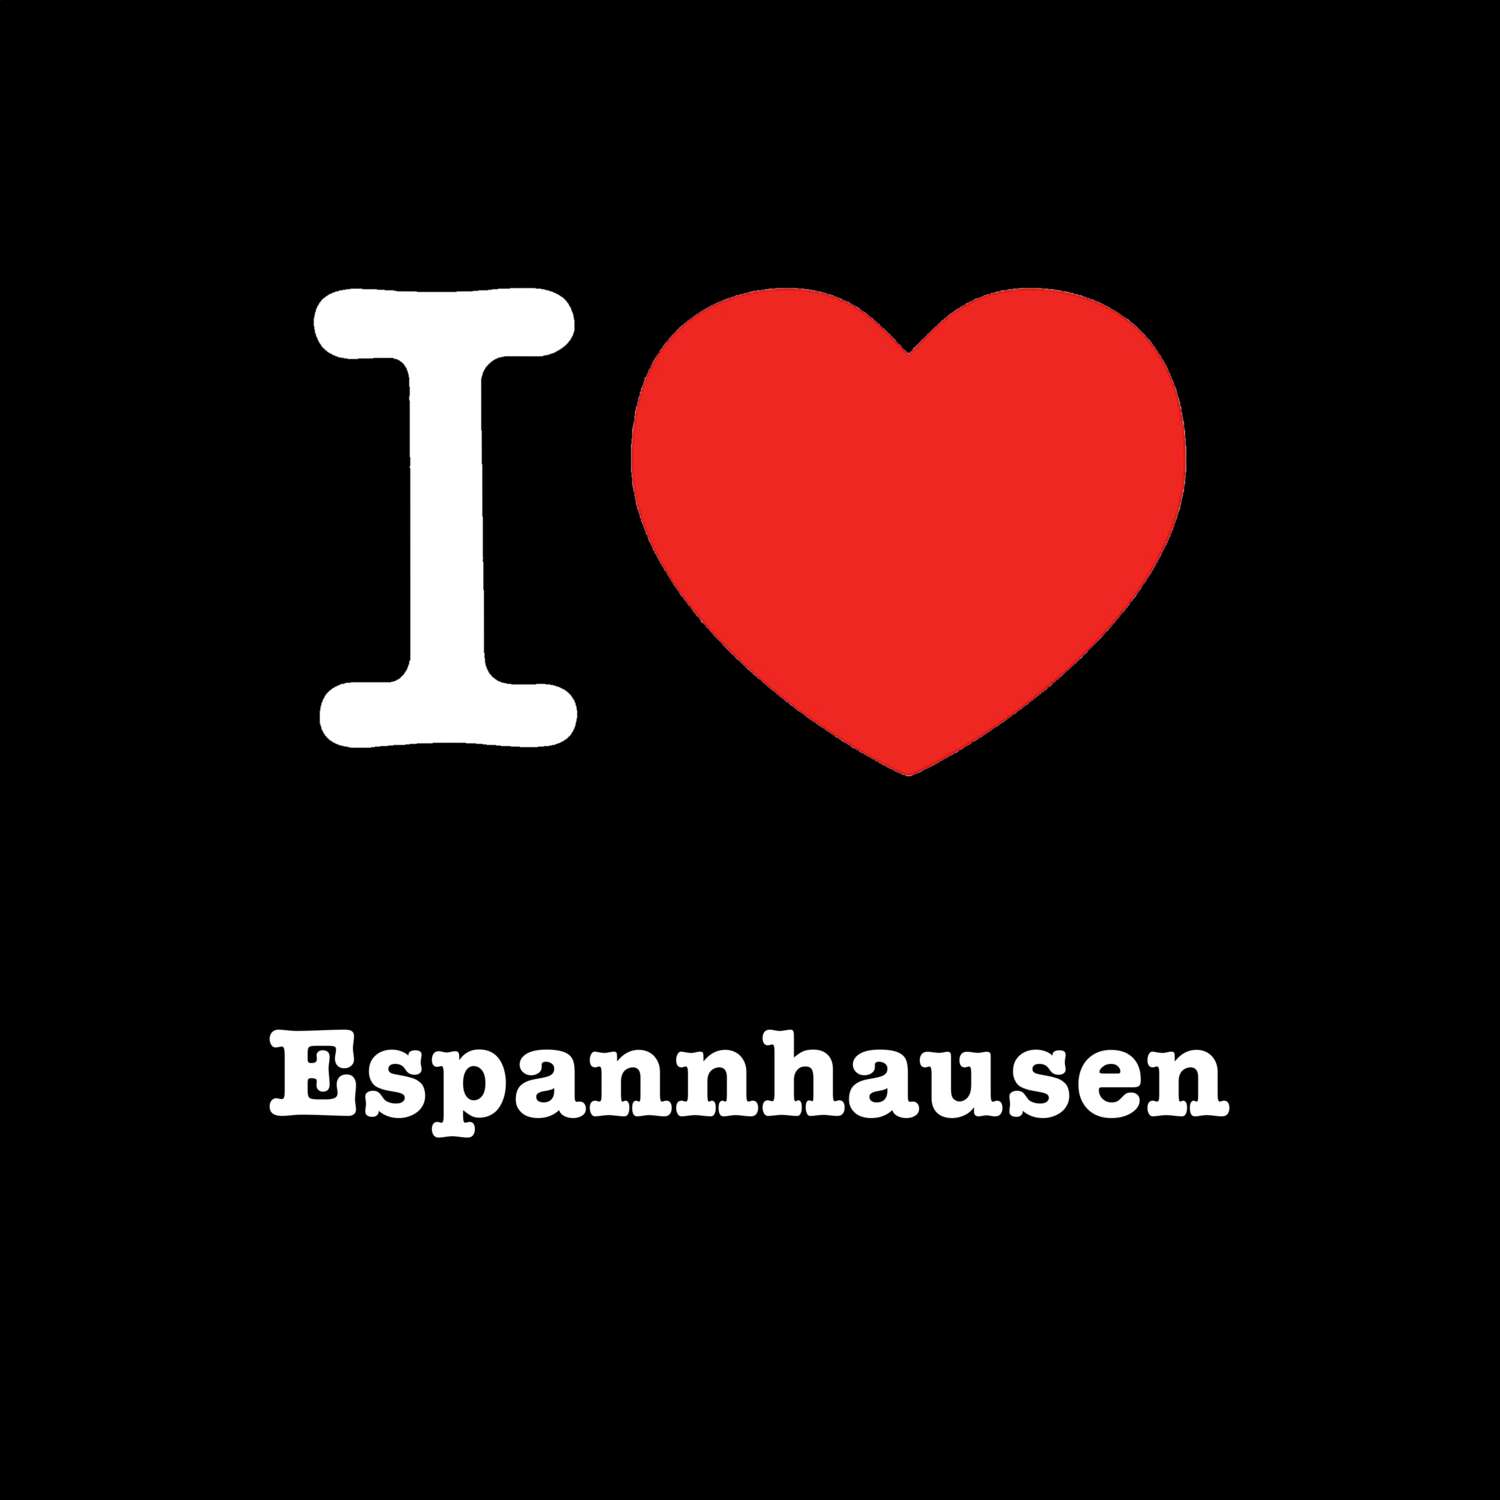 Espannhausen T-Shirt »I love«